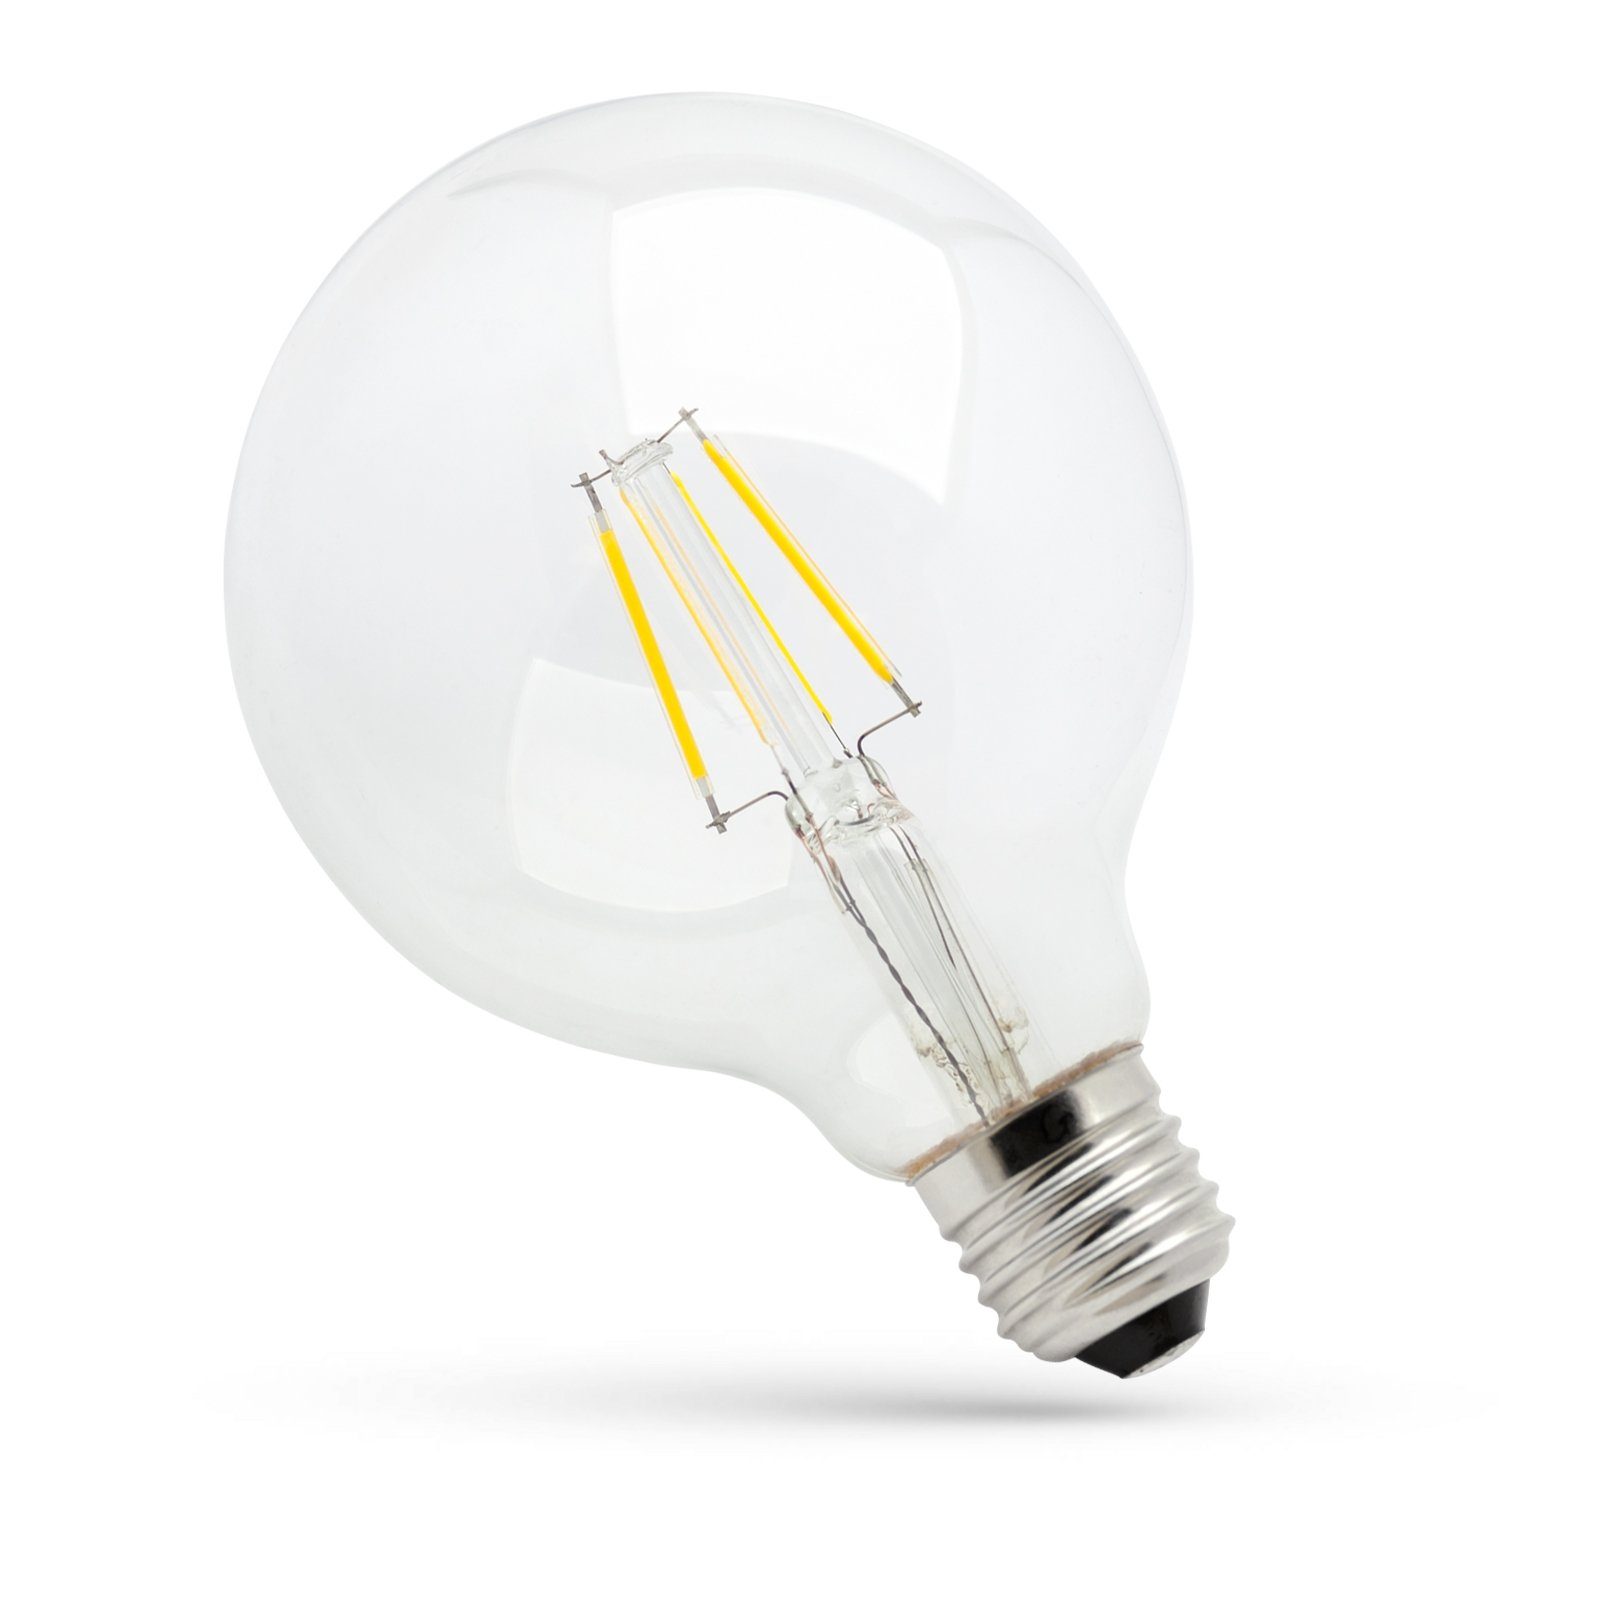 Filament LED Filament Globe, 2700K Warmweiß, LED 36W G95 Klar Globe LED-Leuchtmittel E27 Dimmbar, E27, 4W 380lm Warmweiß SpectrumLED klar DIMMBAR, = spectrum